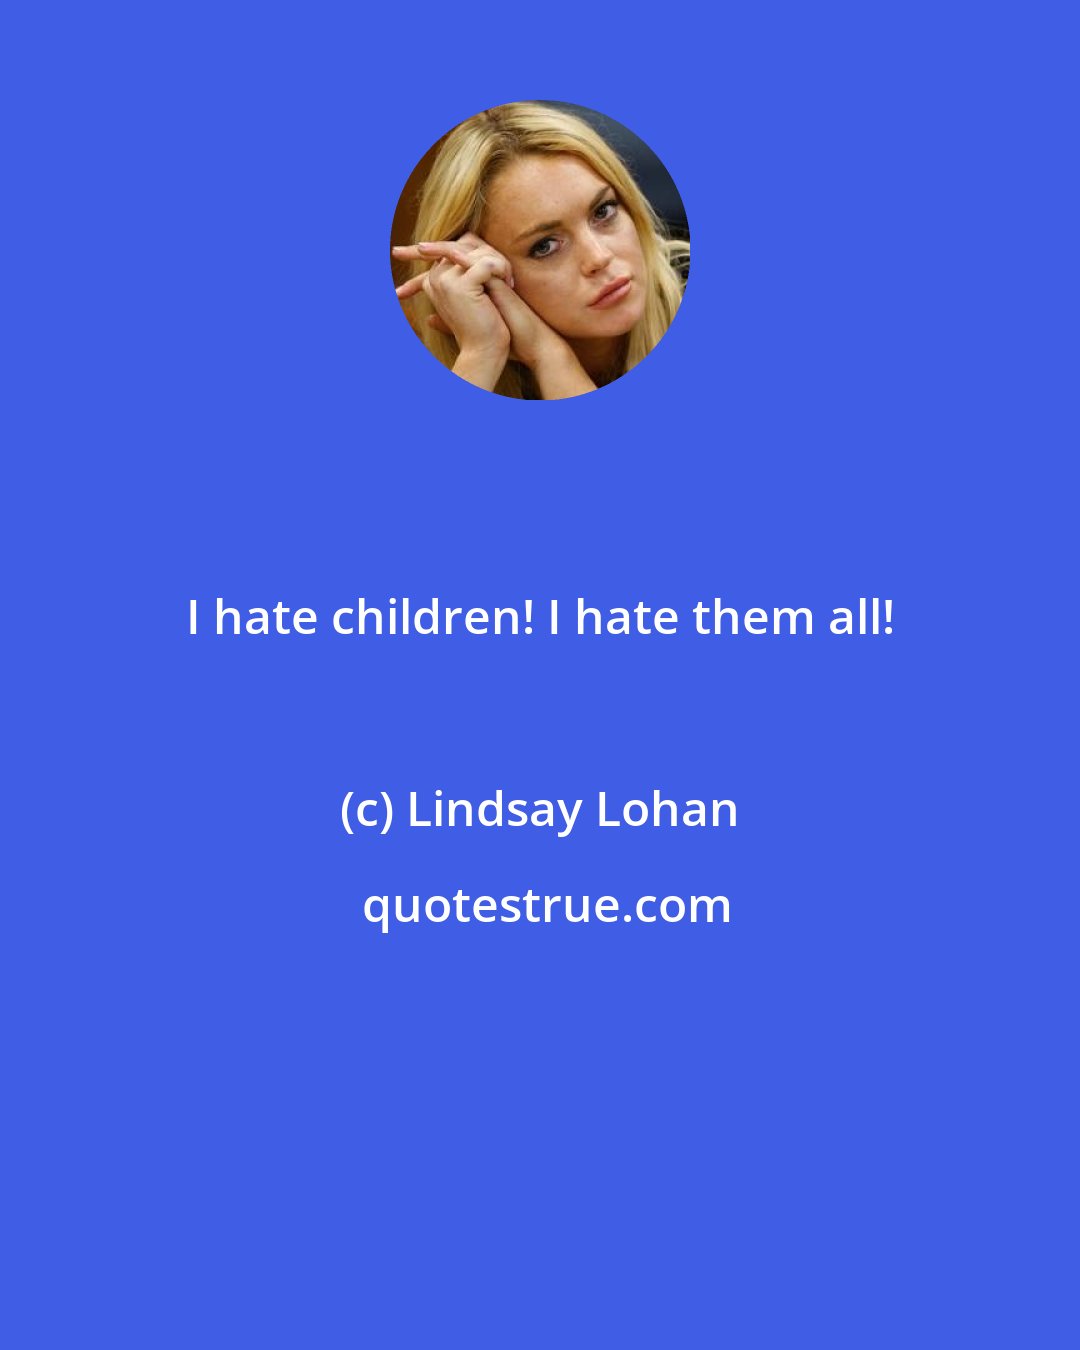 Lindsay Lohan: I hate children! I hate them all!